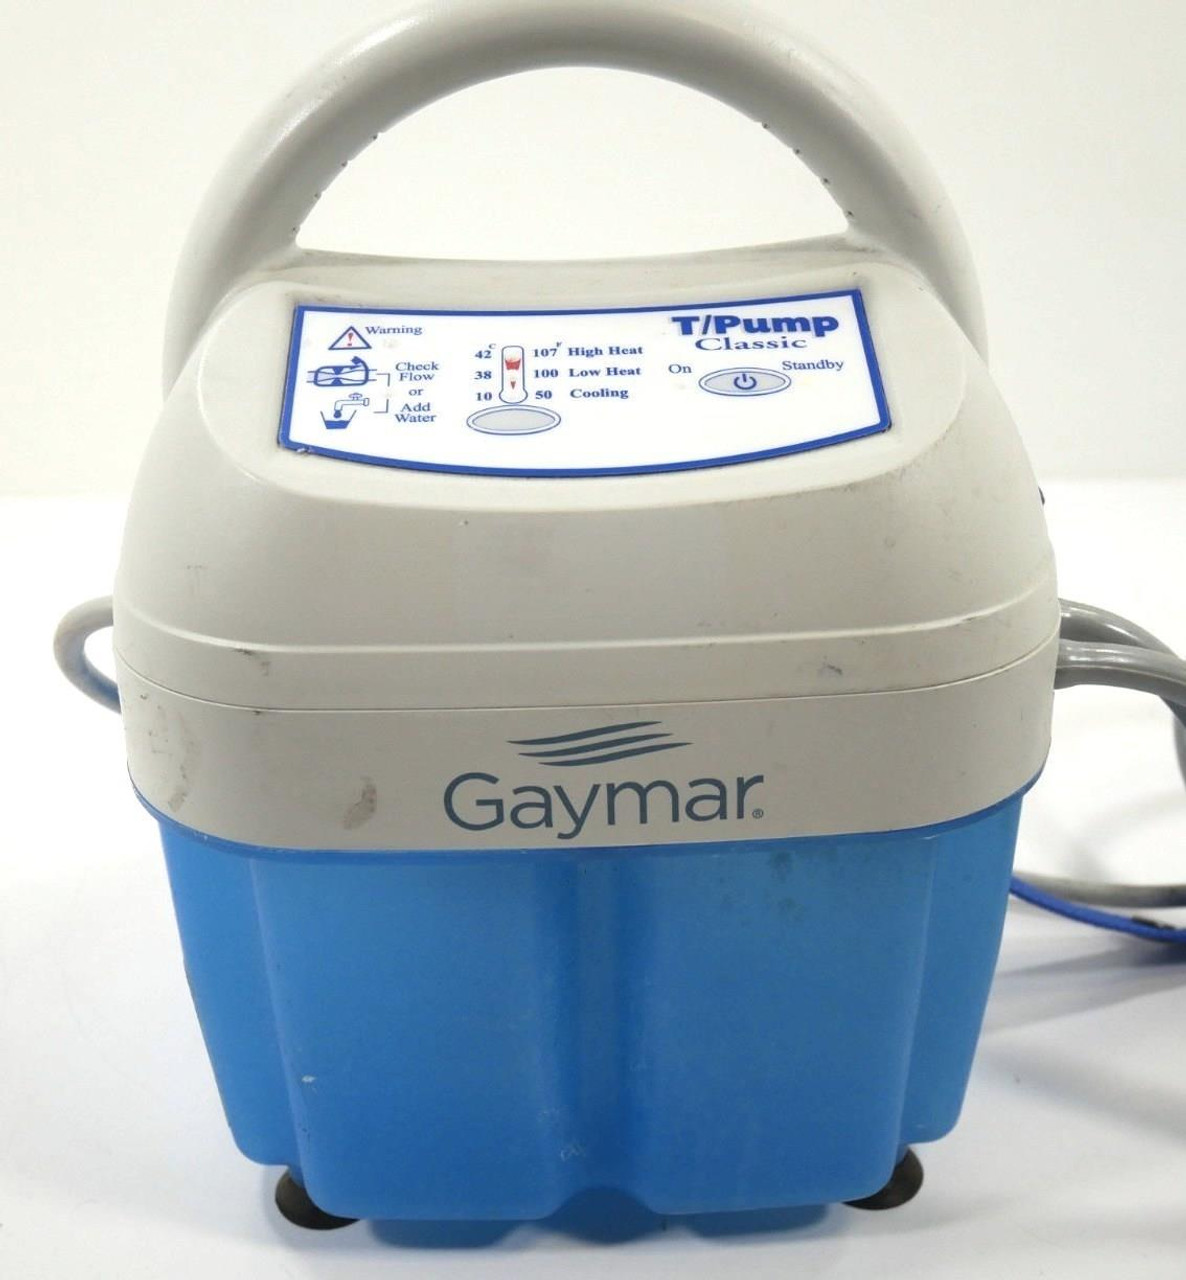 Gaymar T/Pump Heat Therapy pump TP 650 - Free Shipping